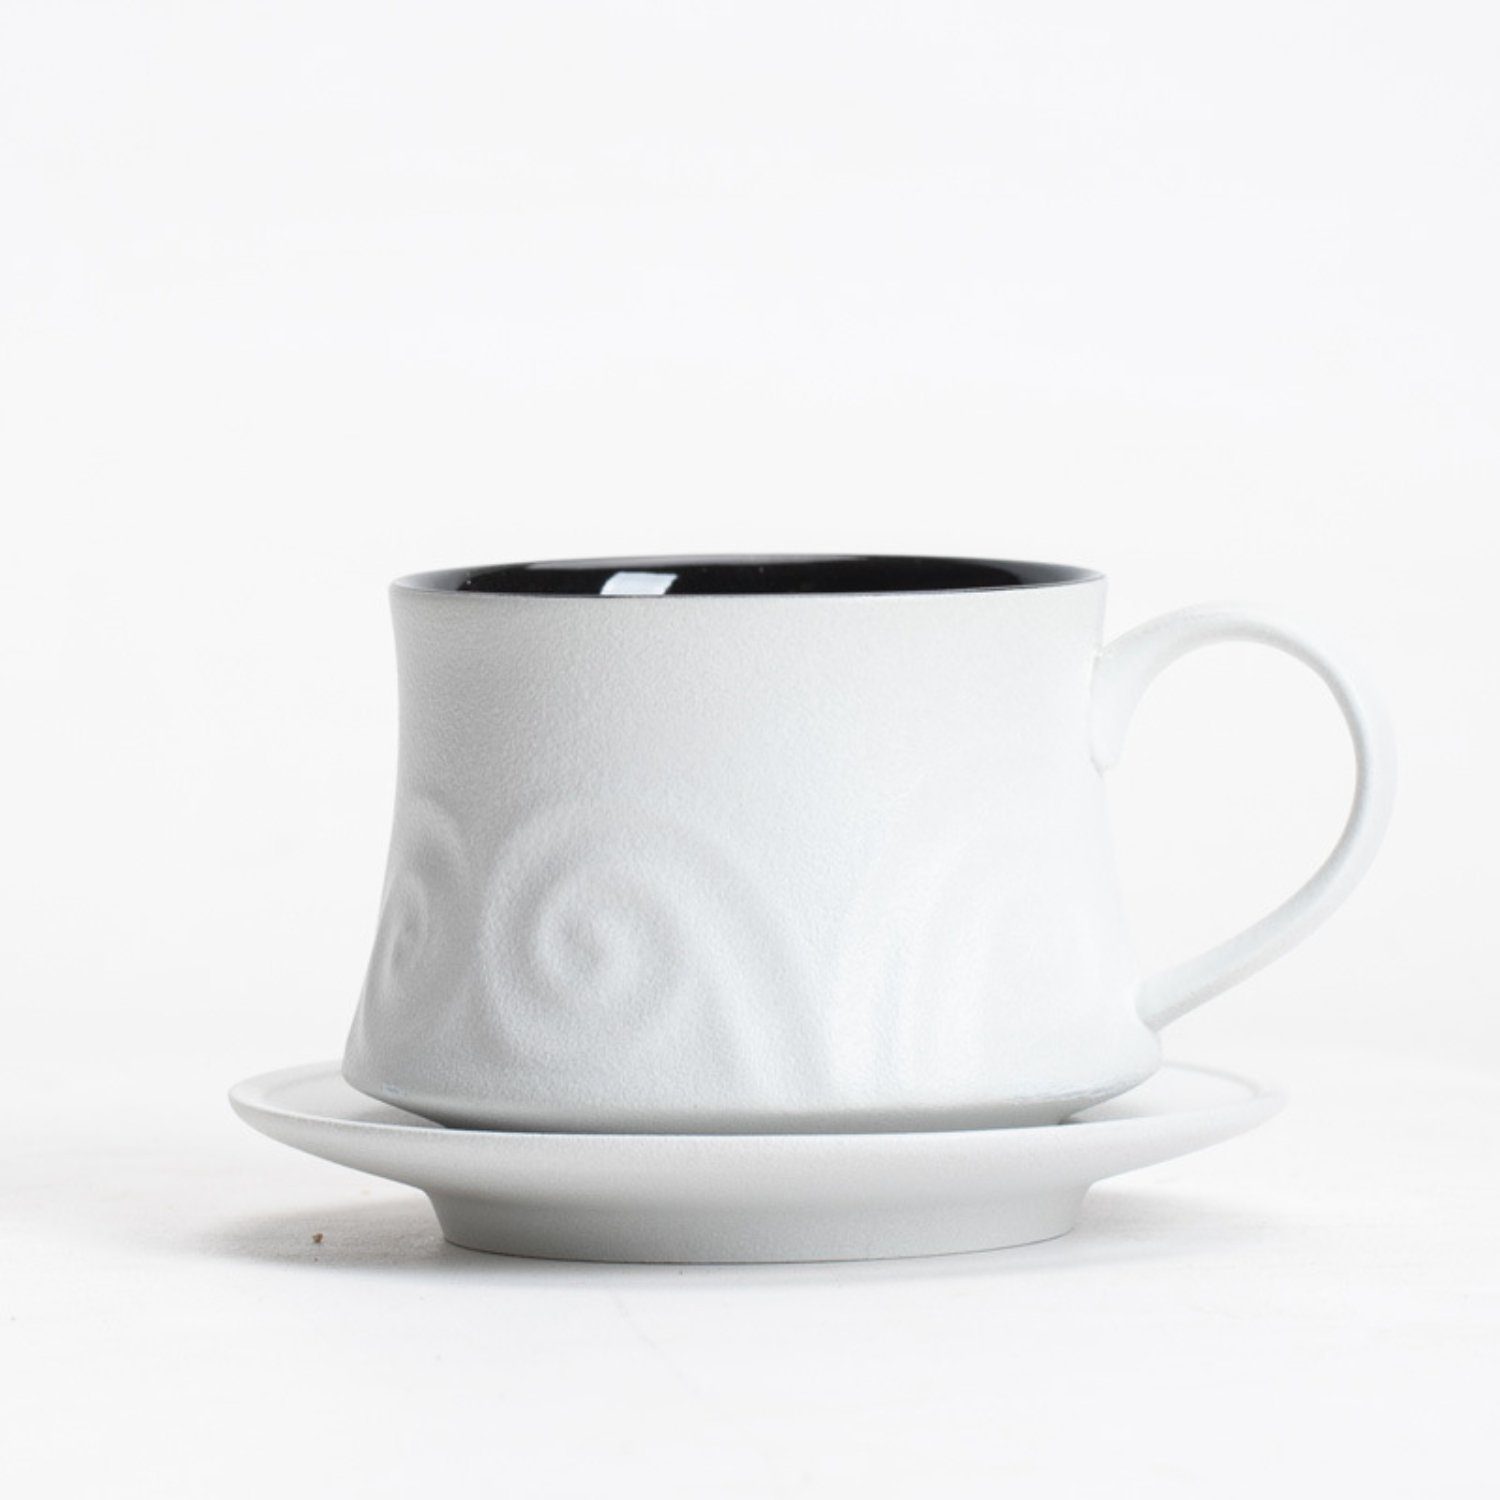 HOMEIDEAS Tasse, Keramik, Kaffeetasse aus Porzellan, Steingut, Tasse Weiß Vintage